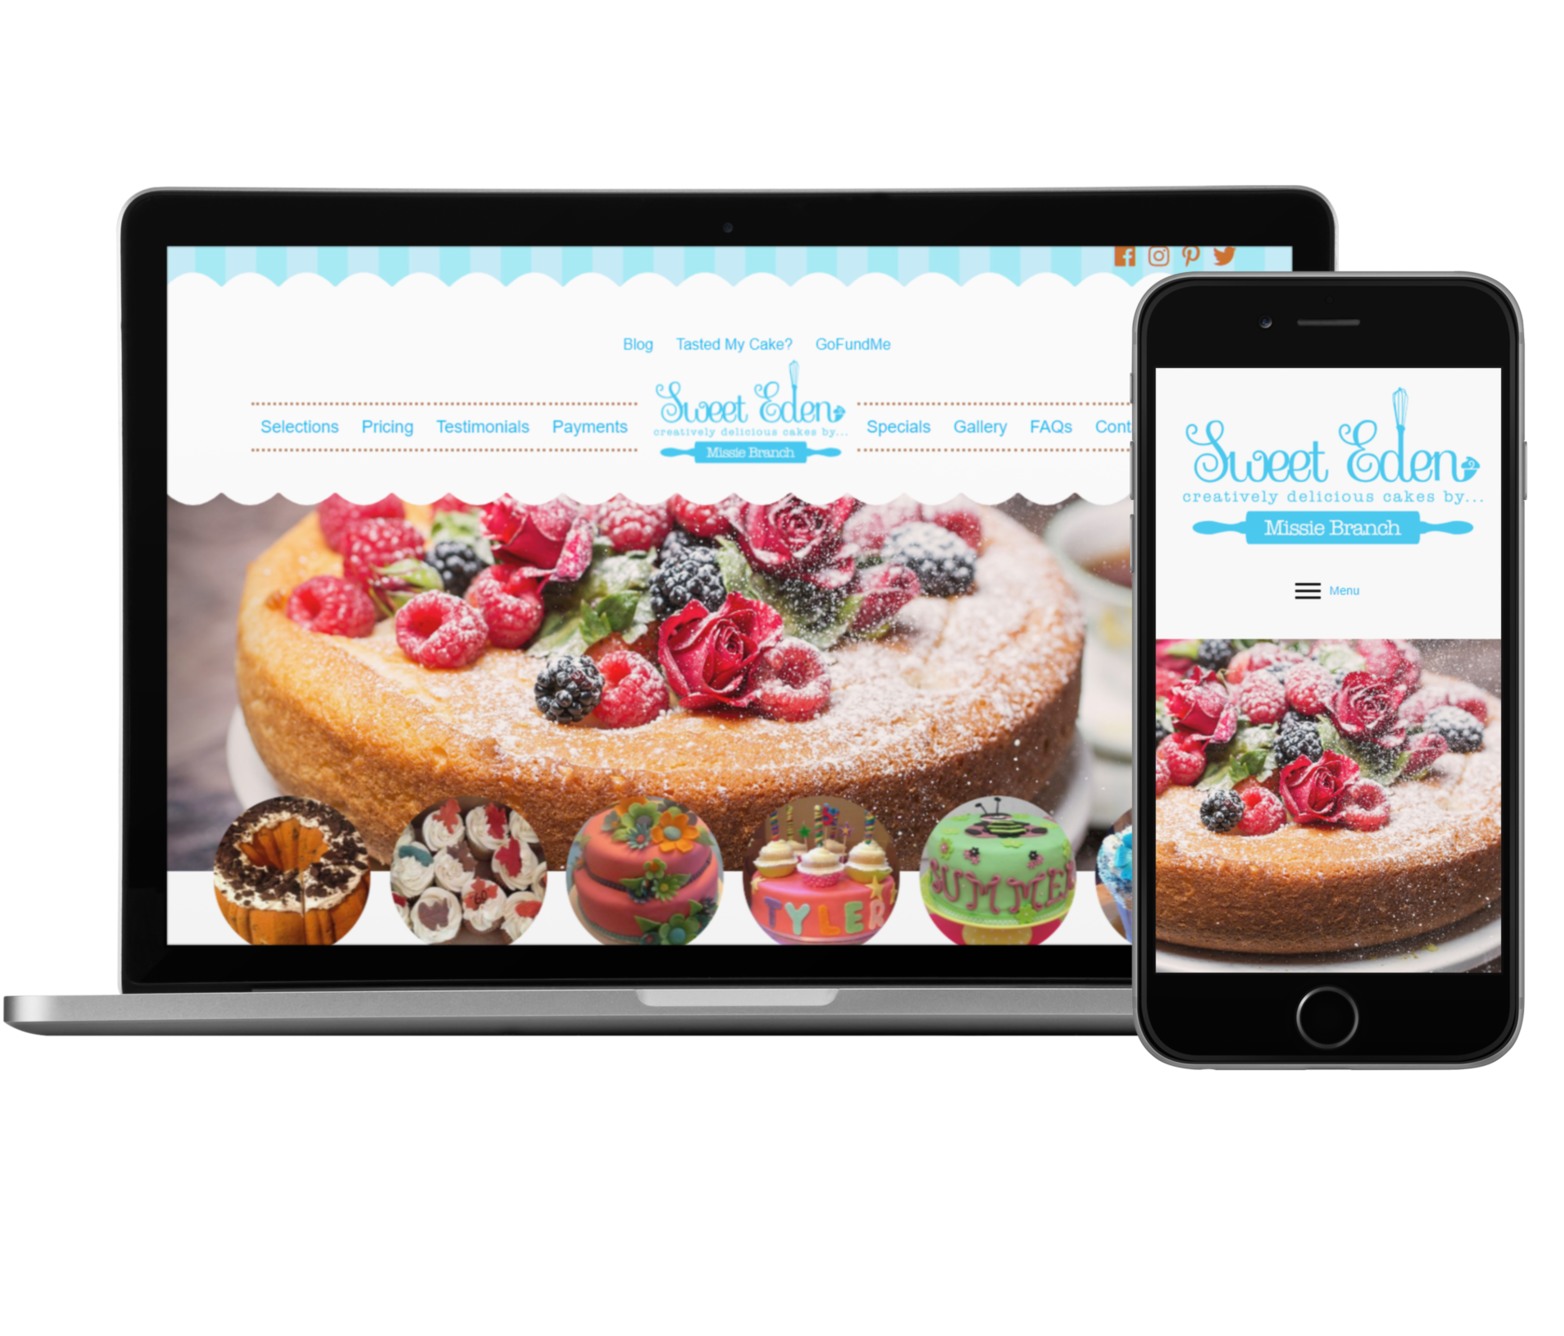 Online Bakery Website Design by June Wilson of JDWeb Solutions - Sweet Eden Sweets by Missie Branch 2019 2020